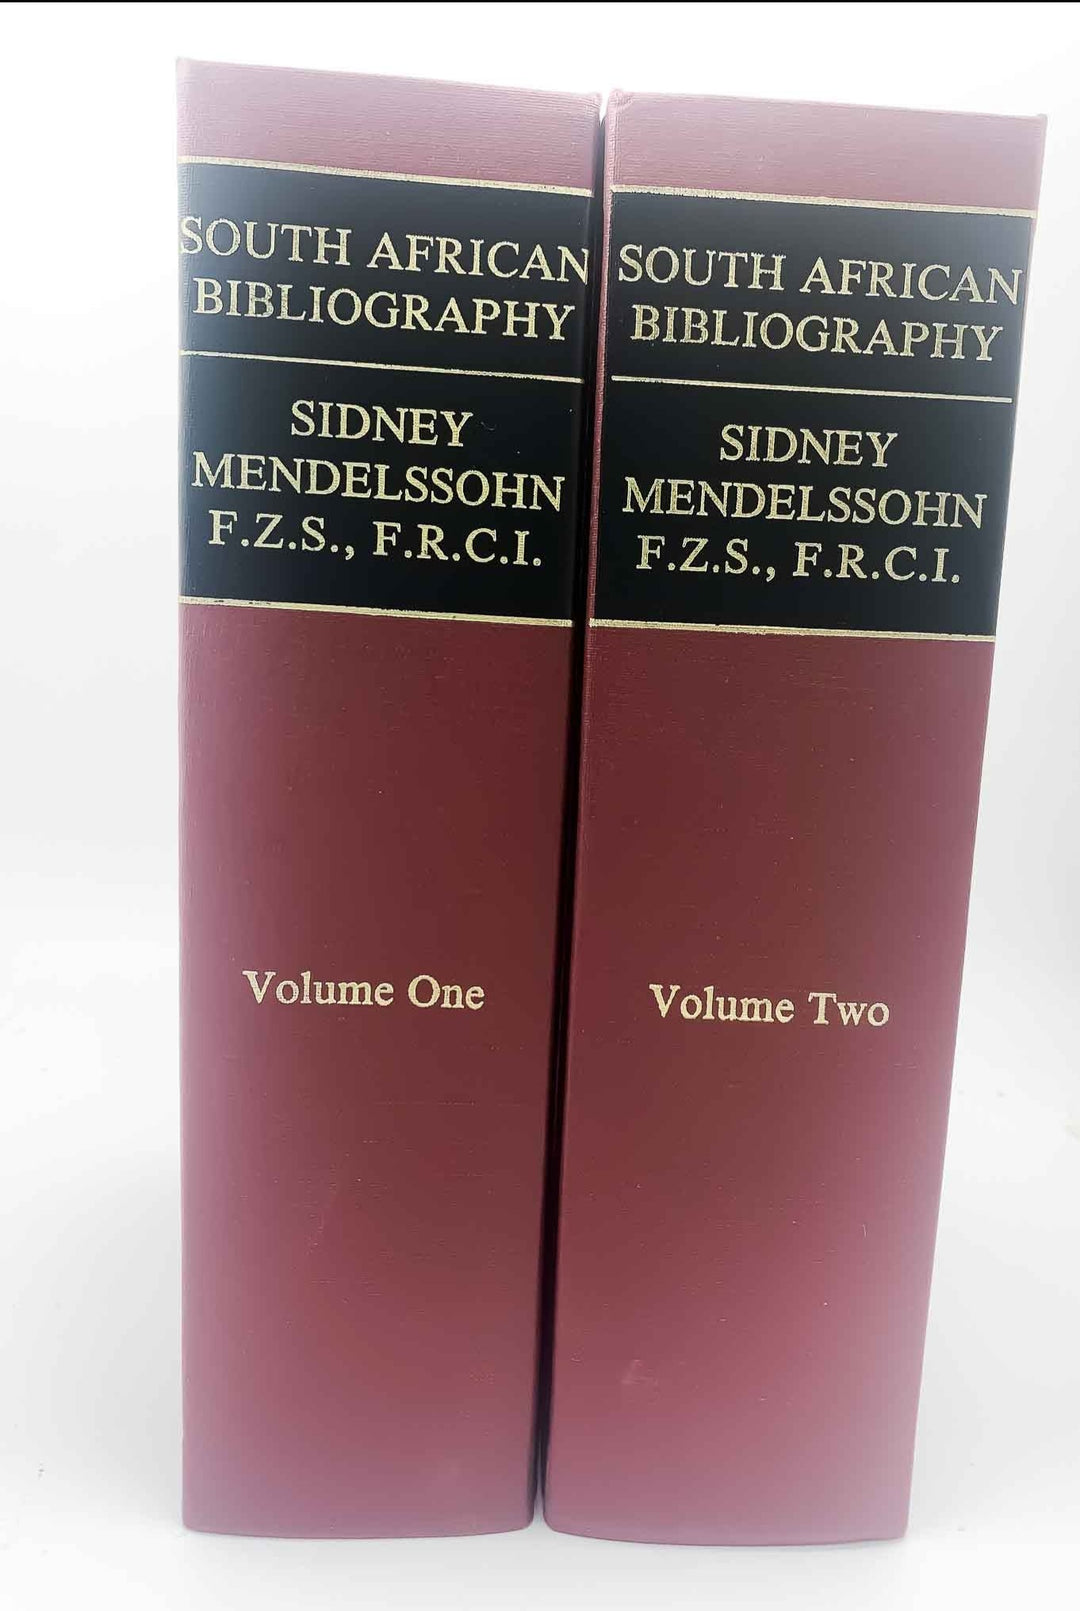 Mendelssohn, Sidney - South African Bibliography